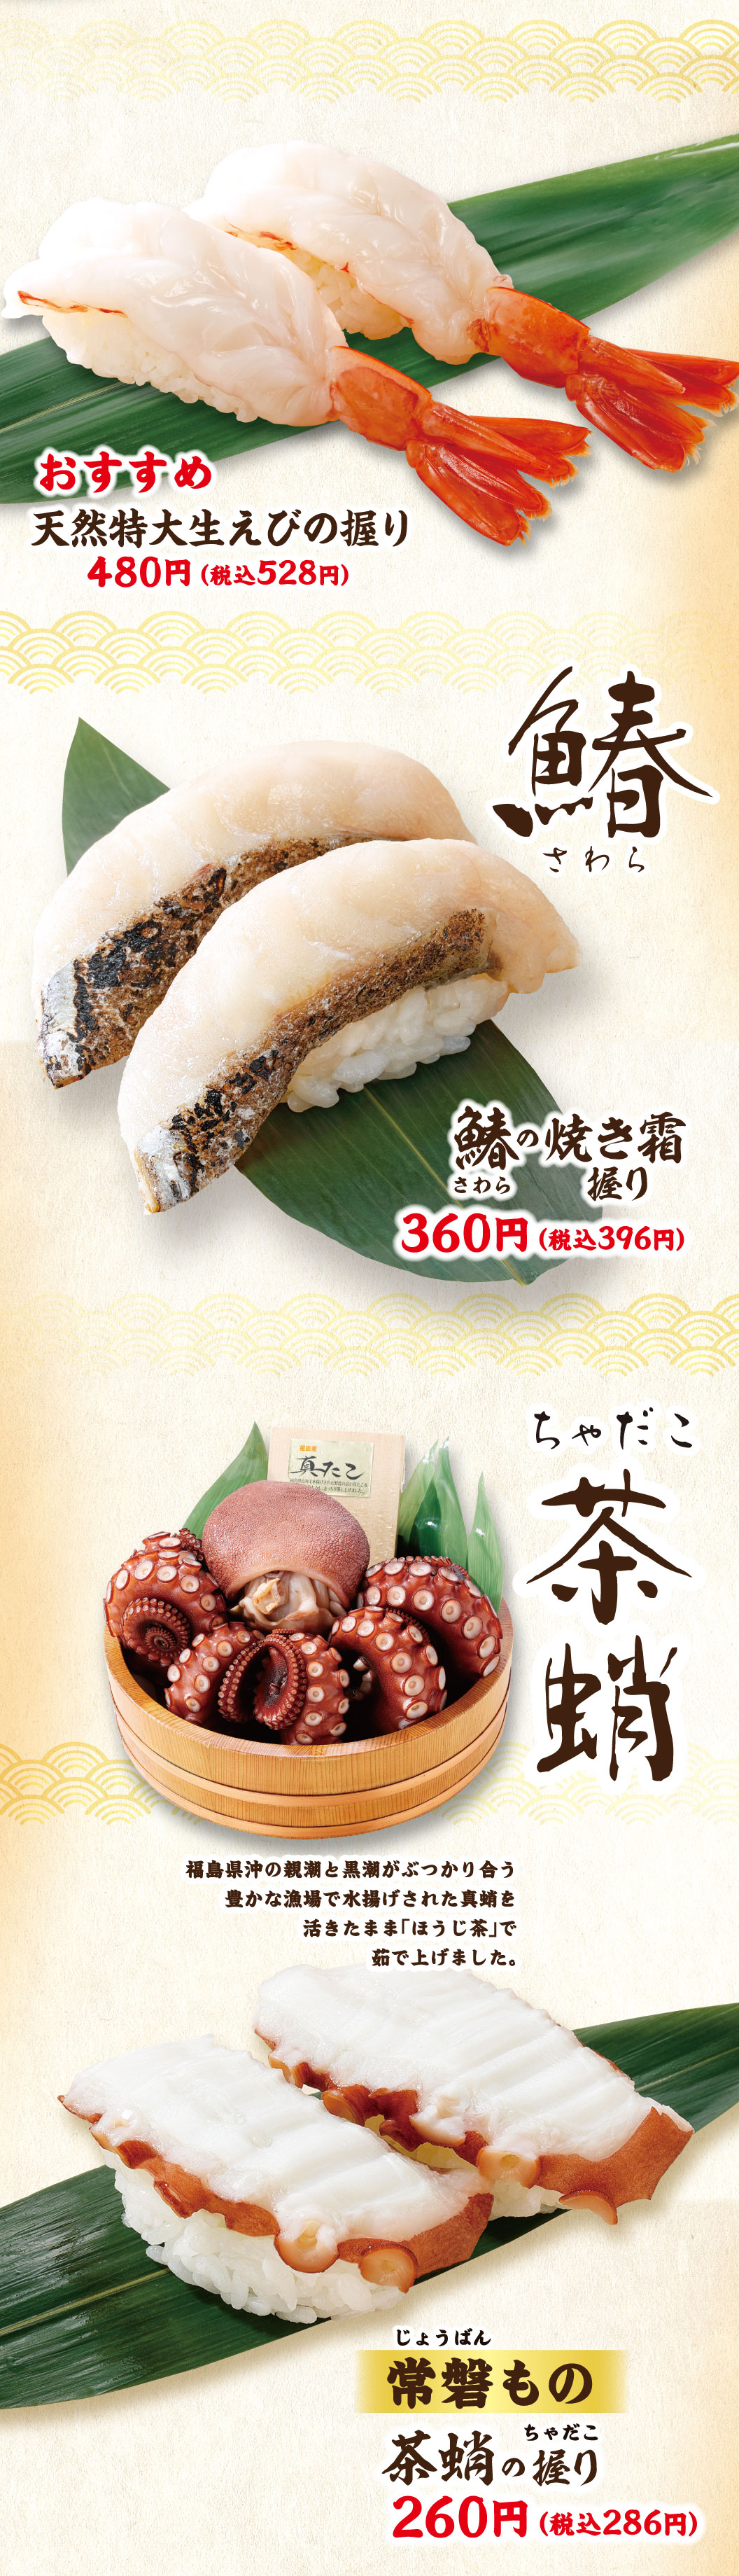 Natural extra large raw shrimp nigiri, grilled frosted Spanish mackerel nigiri, tea octopus nigiri